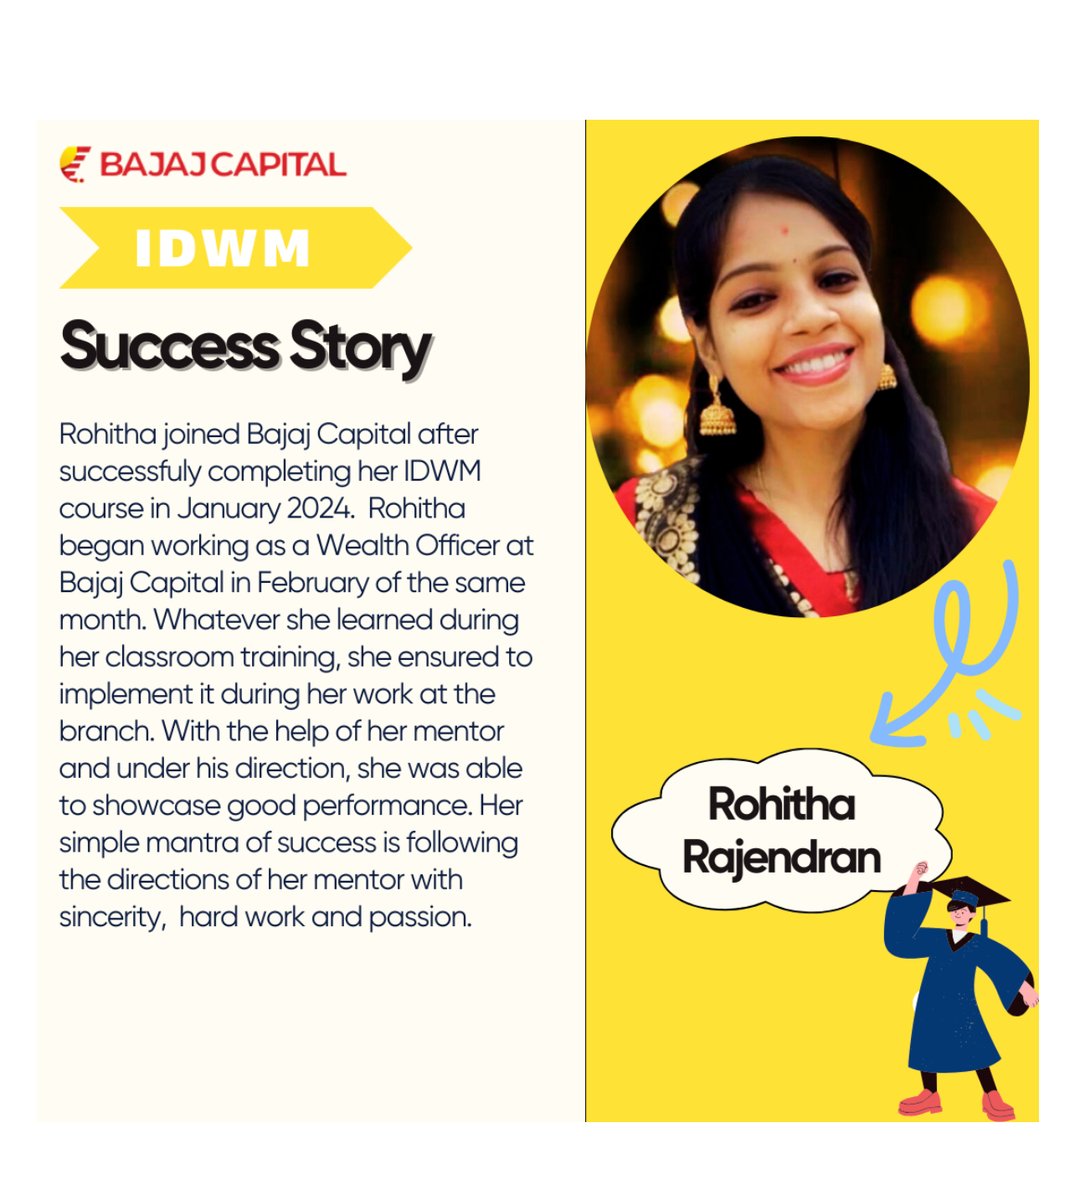 Rohitha Rajendran: The Success Story of ICOFP 🌟
#SuccessStory #FinancialExcellence #BajajCapital #InspiringWomen #idwm